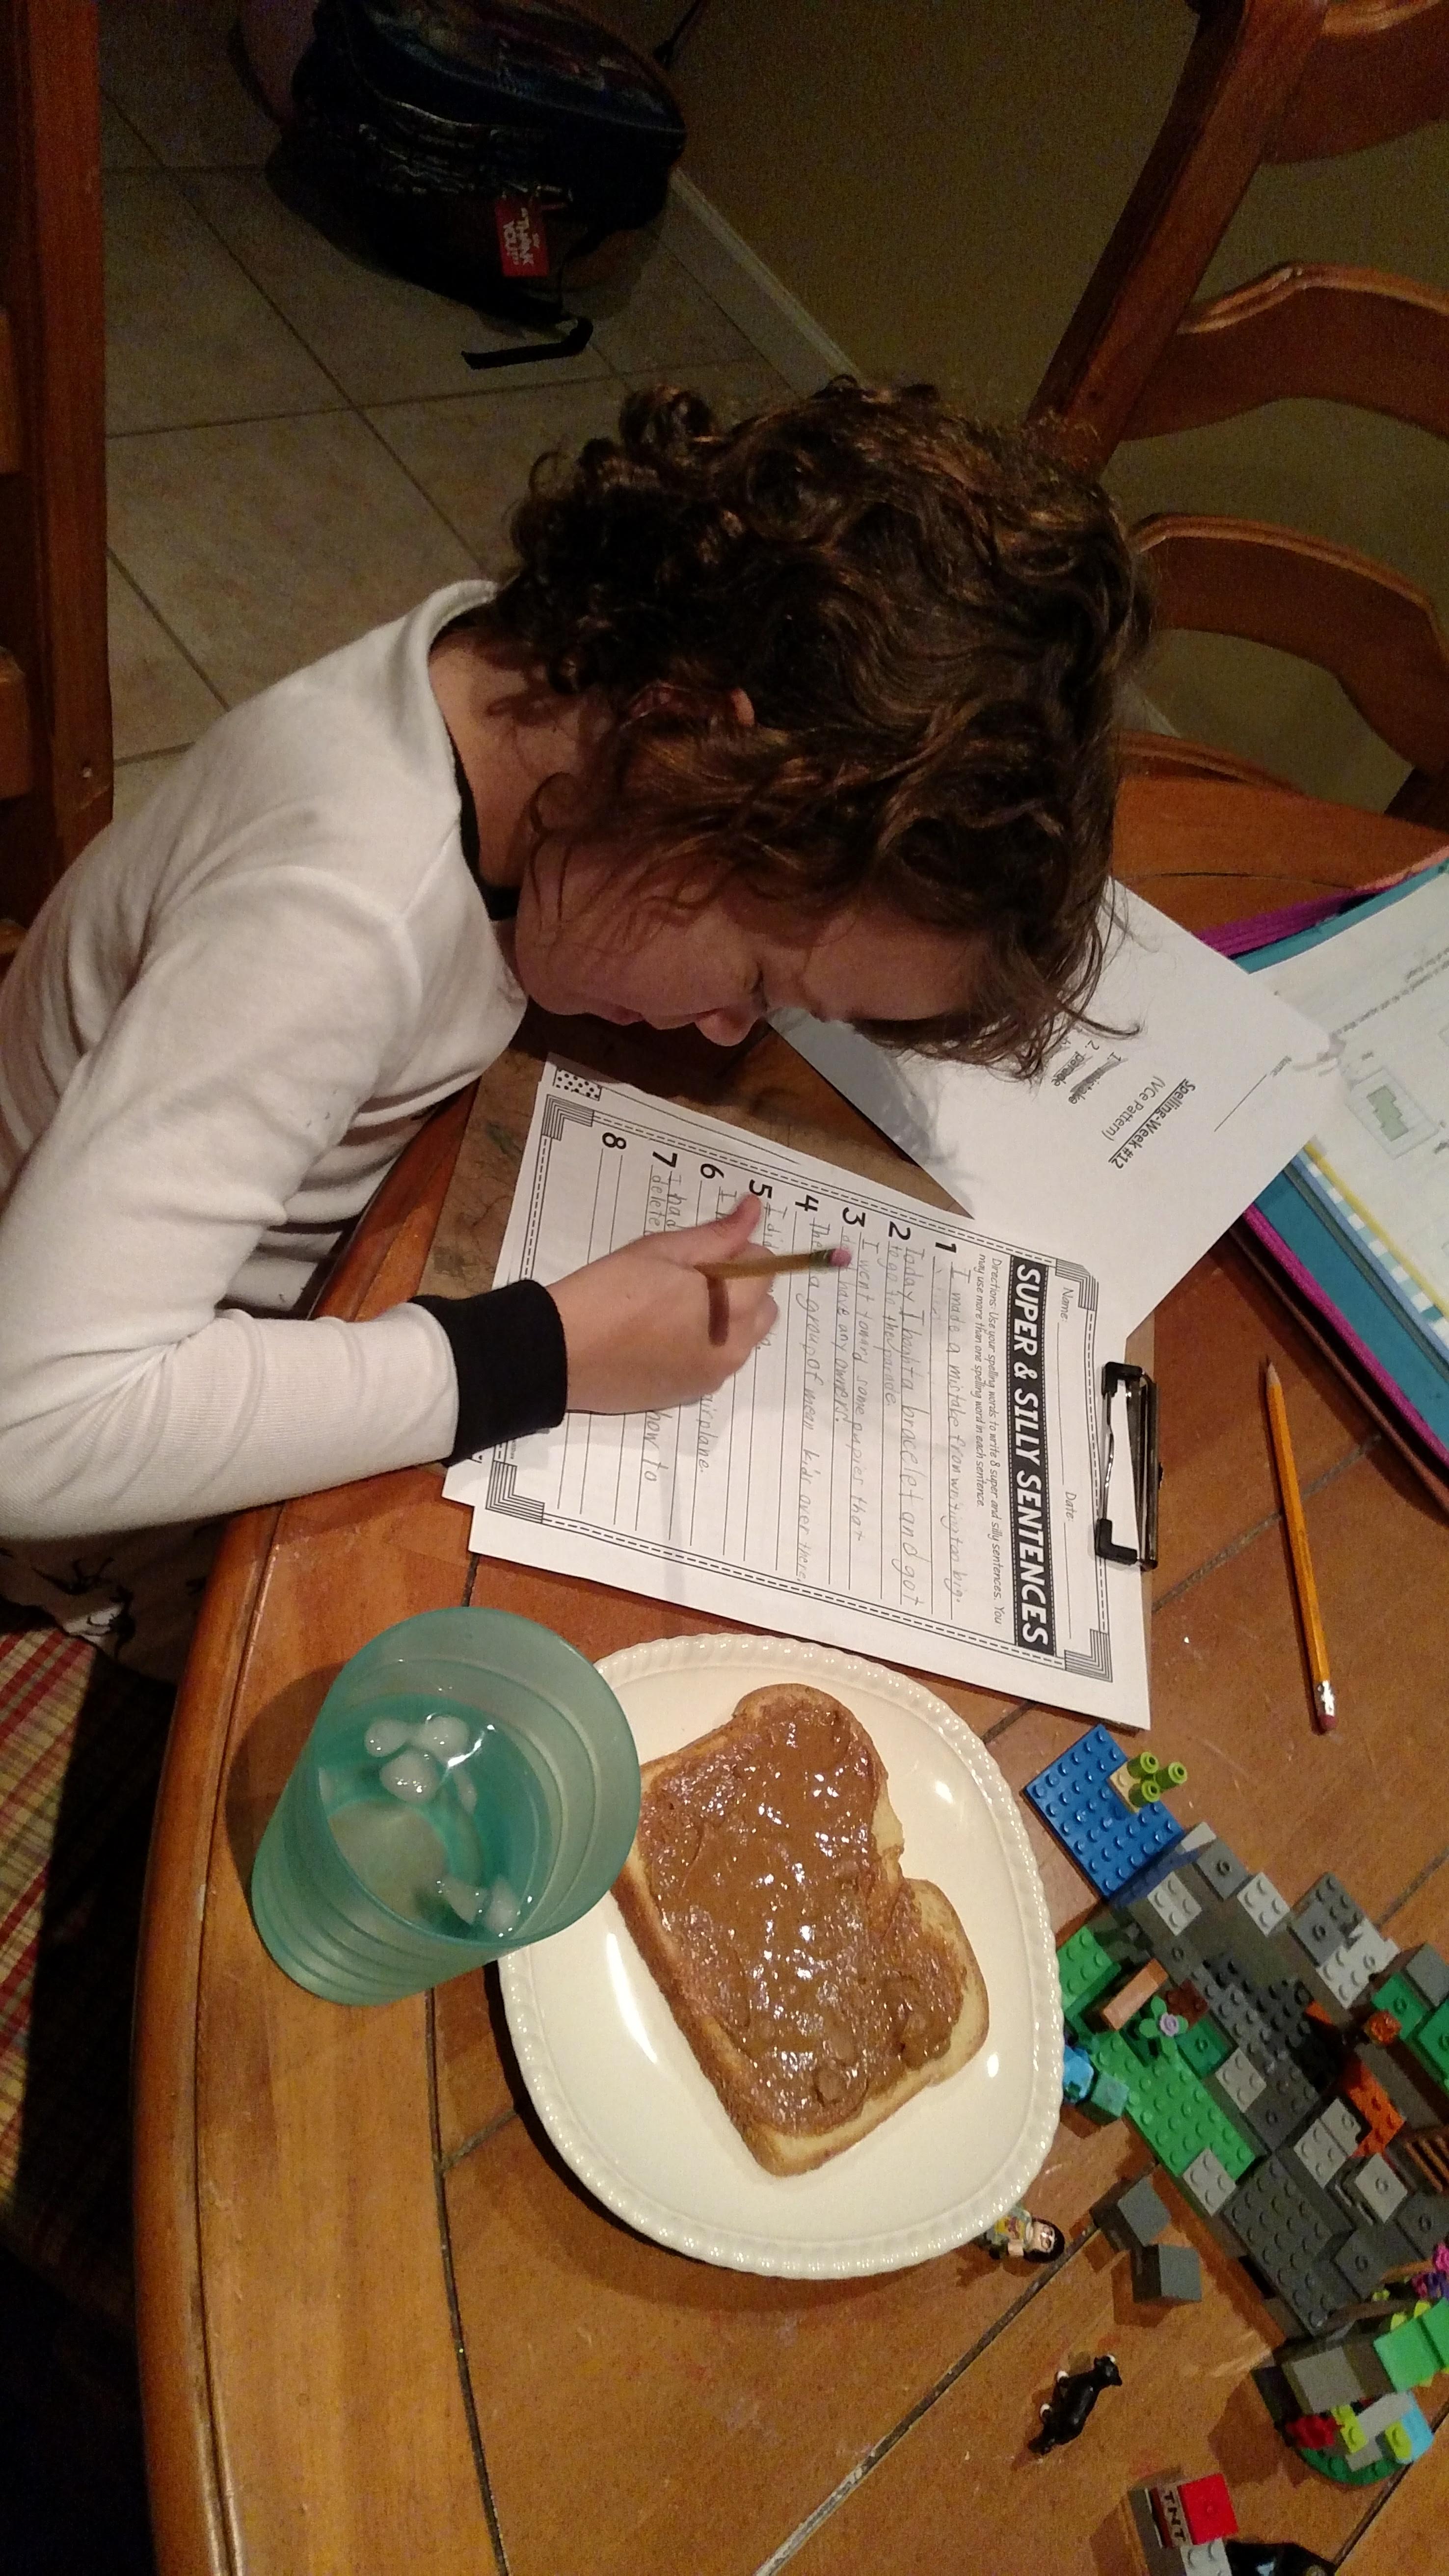 A little girl at the breakfast table doing homework.